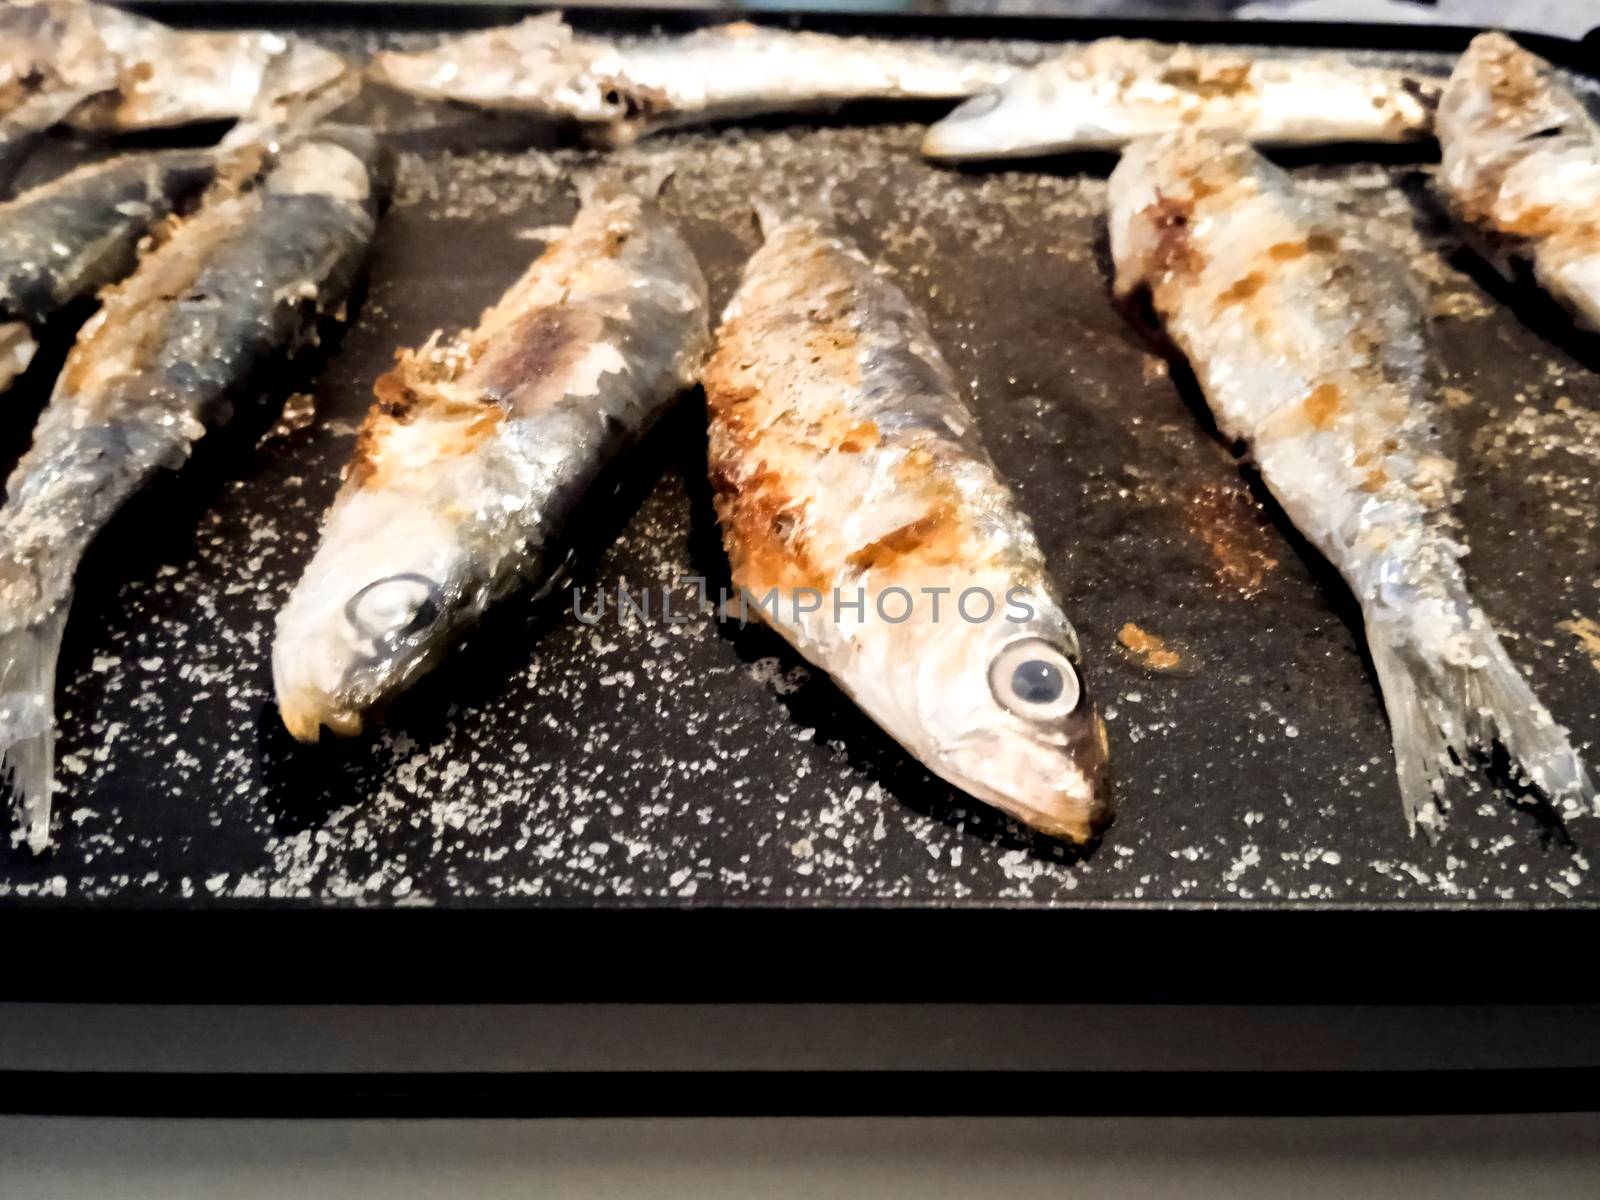 Roasted sardines outdoors in Spain in summer